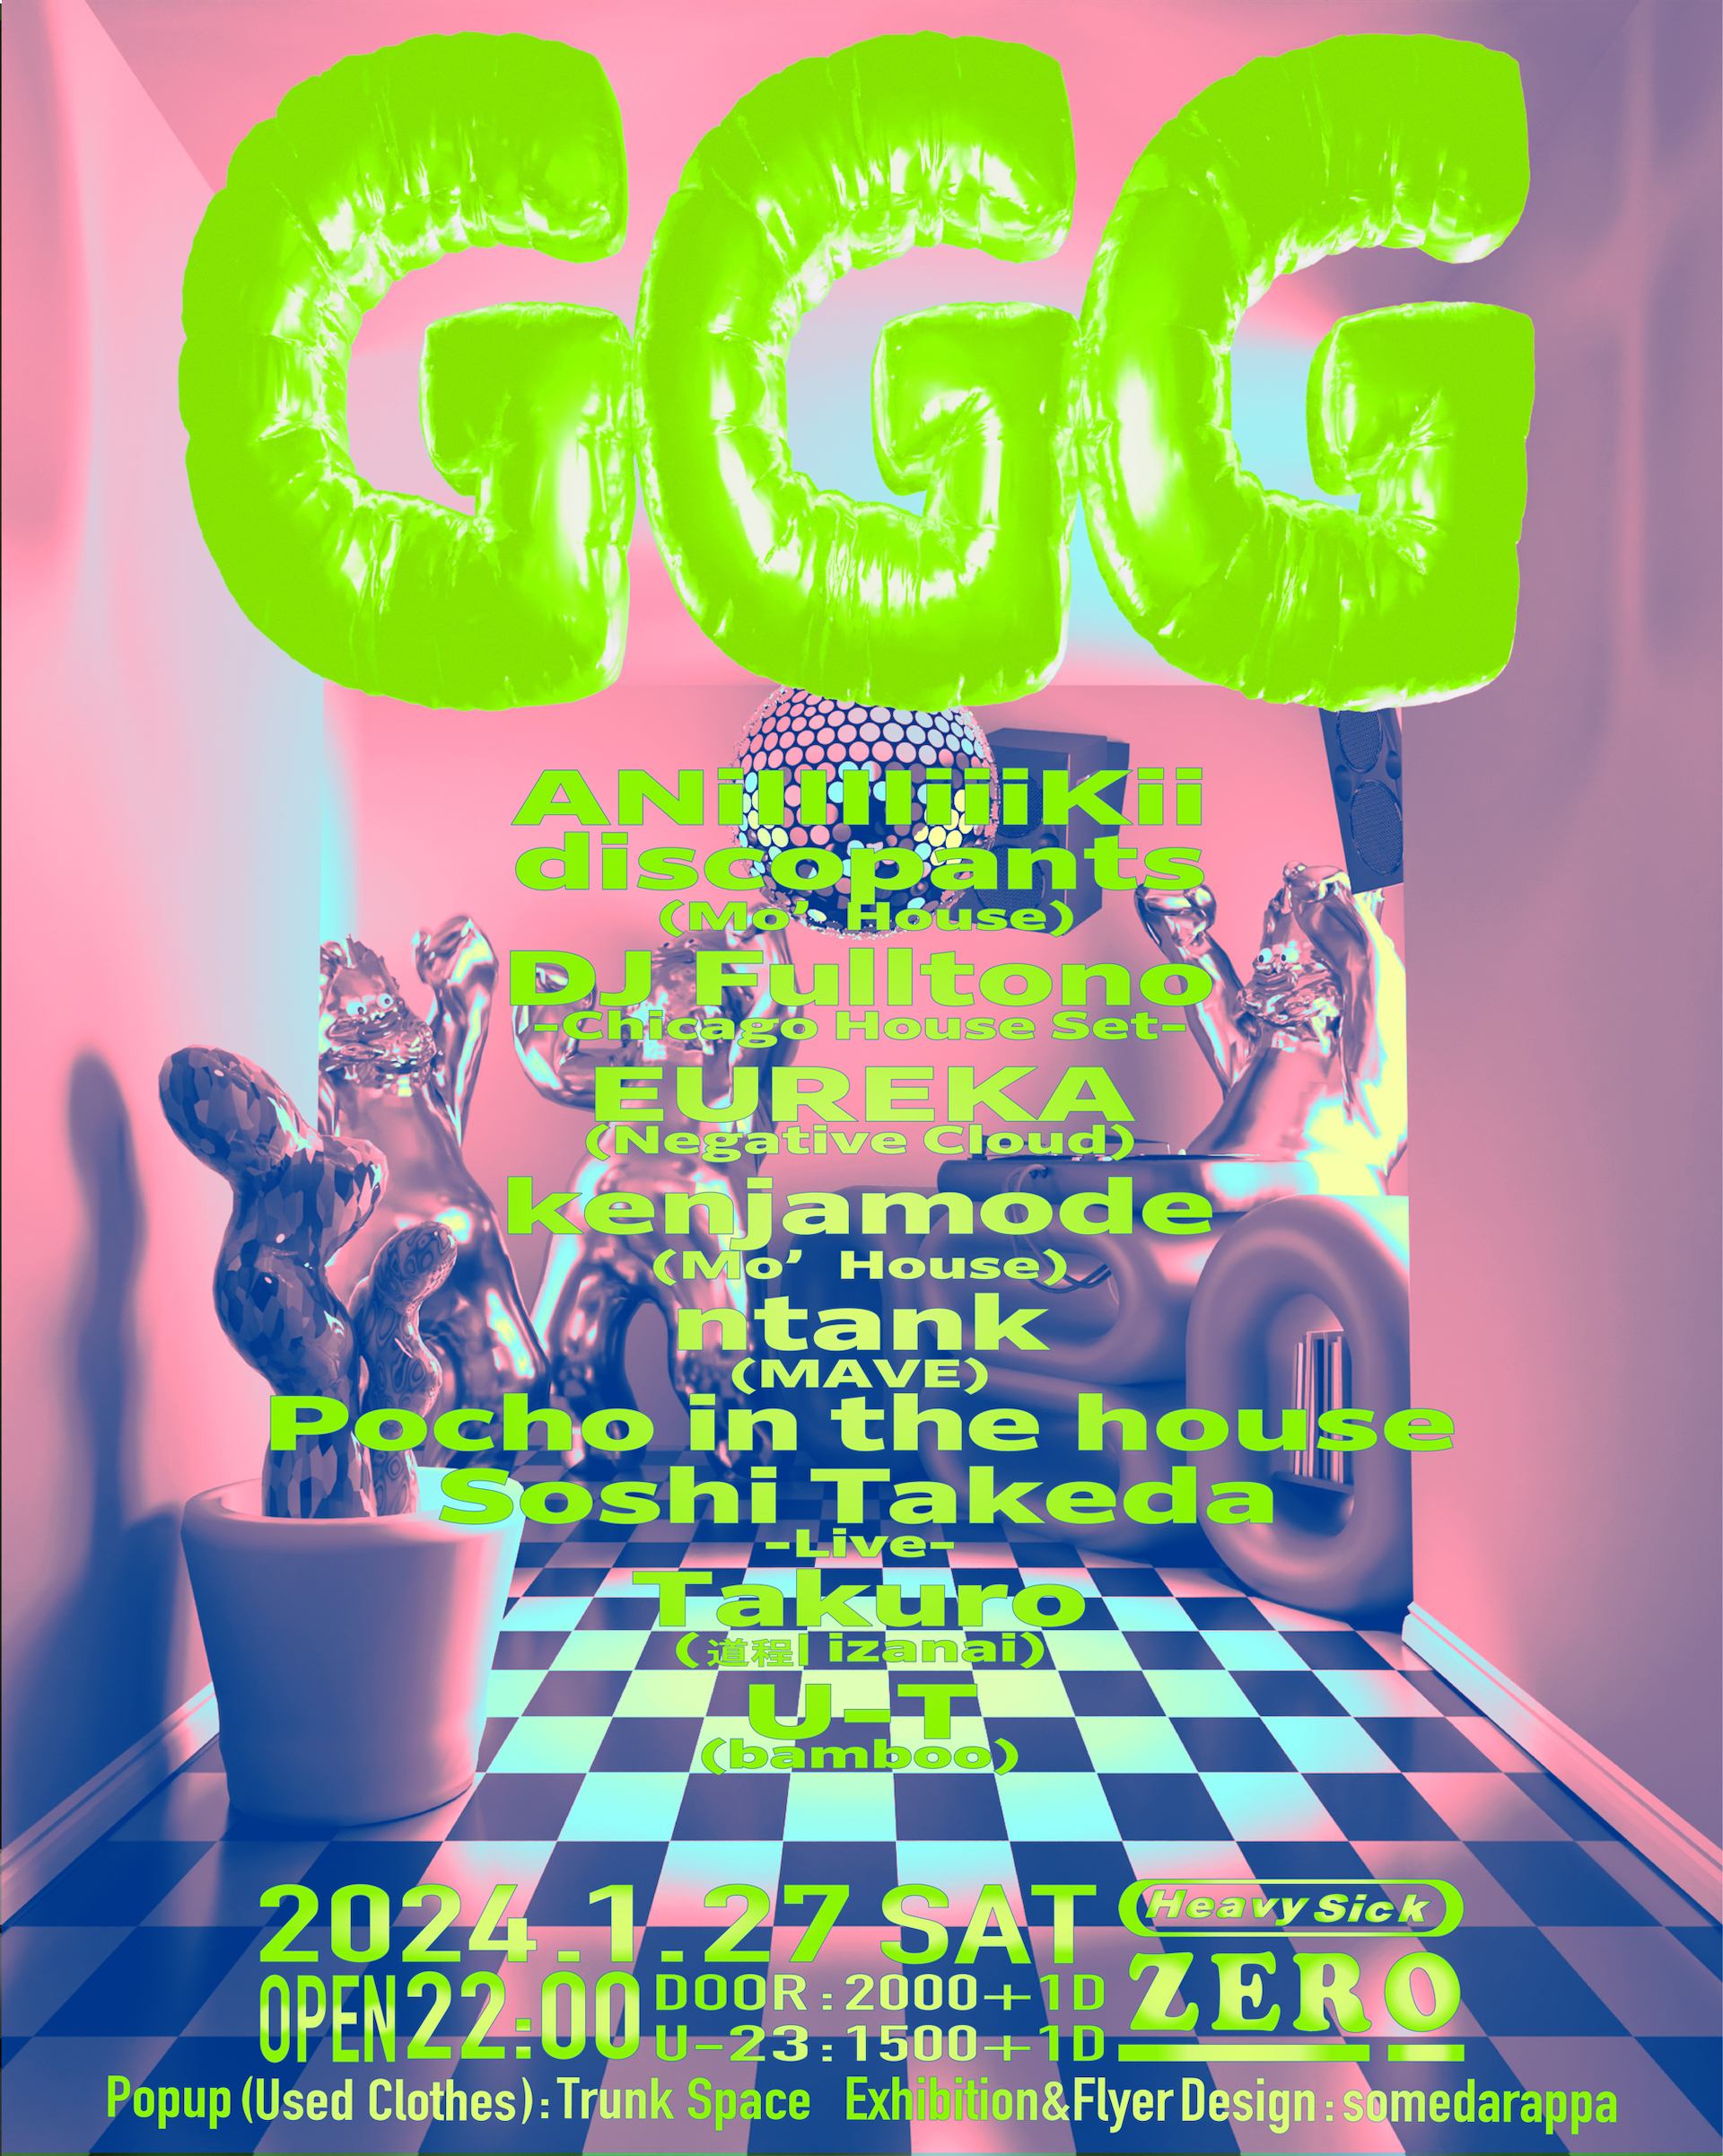 DJ Fulltono、ANiIIIIiiiKii、Soshi Takeda、ntank（MAVE）らが出演｜パーティー＜GGG（Great Giant Good）＞の拡大版が中野heavysick ZEROで開催 music240117-ggg2